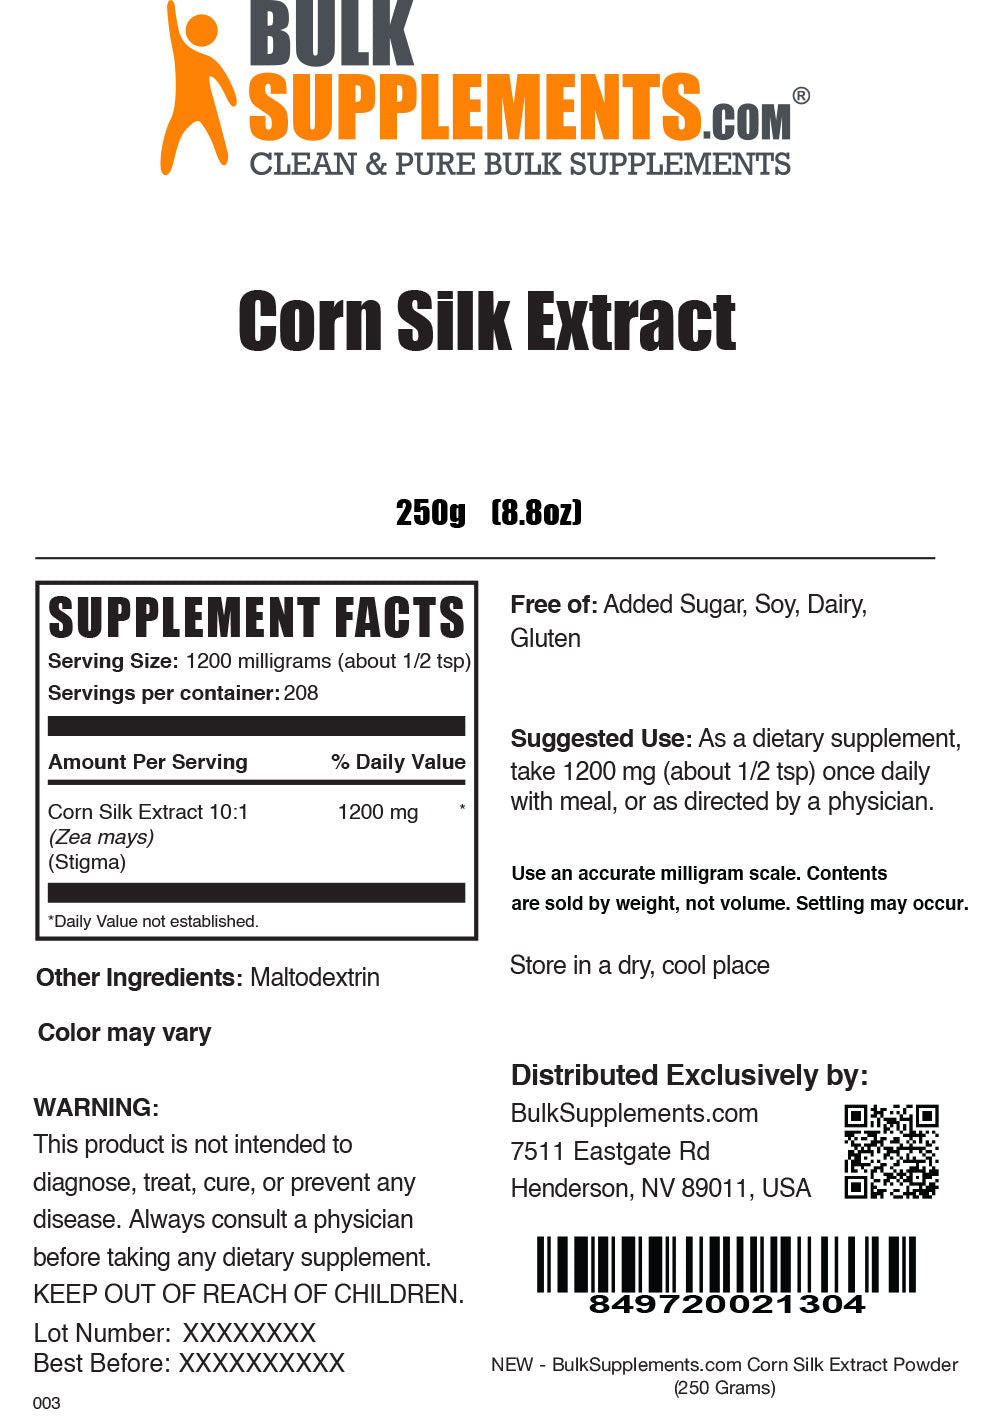 Corn Silk Extract powder label 250g